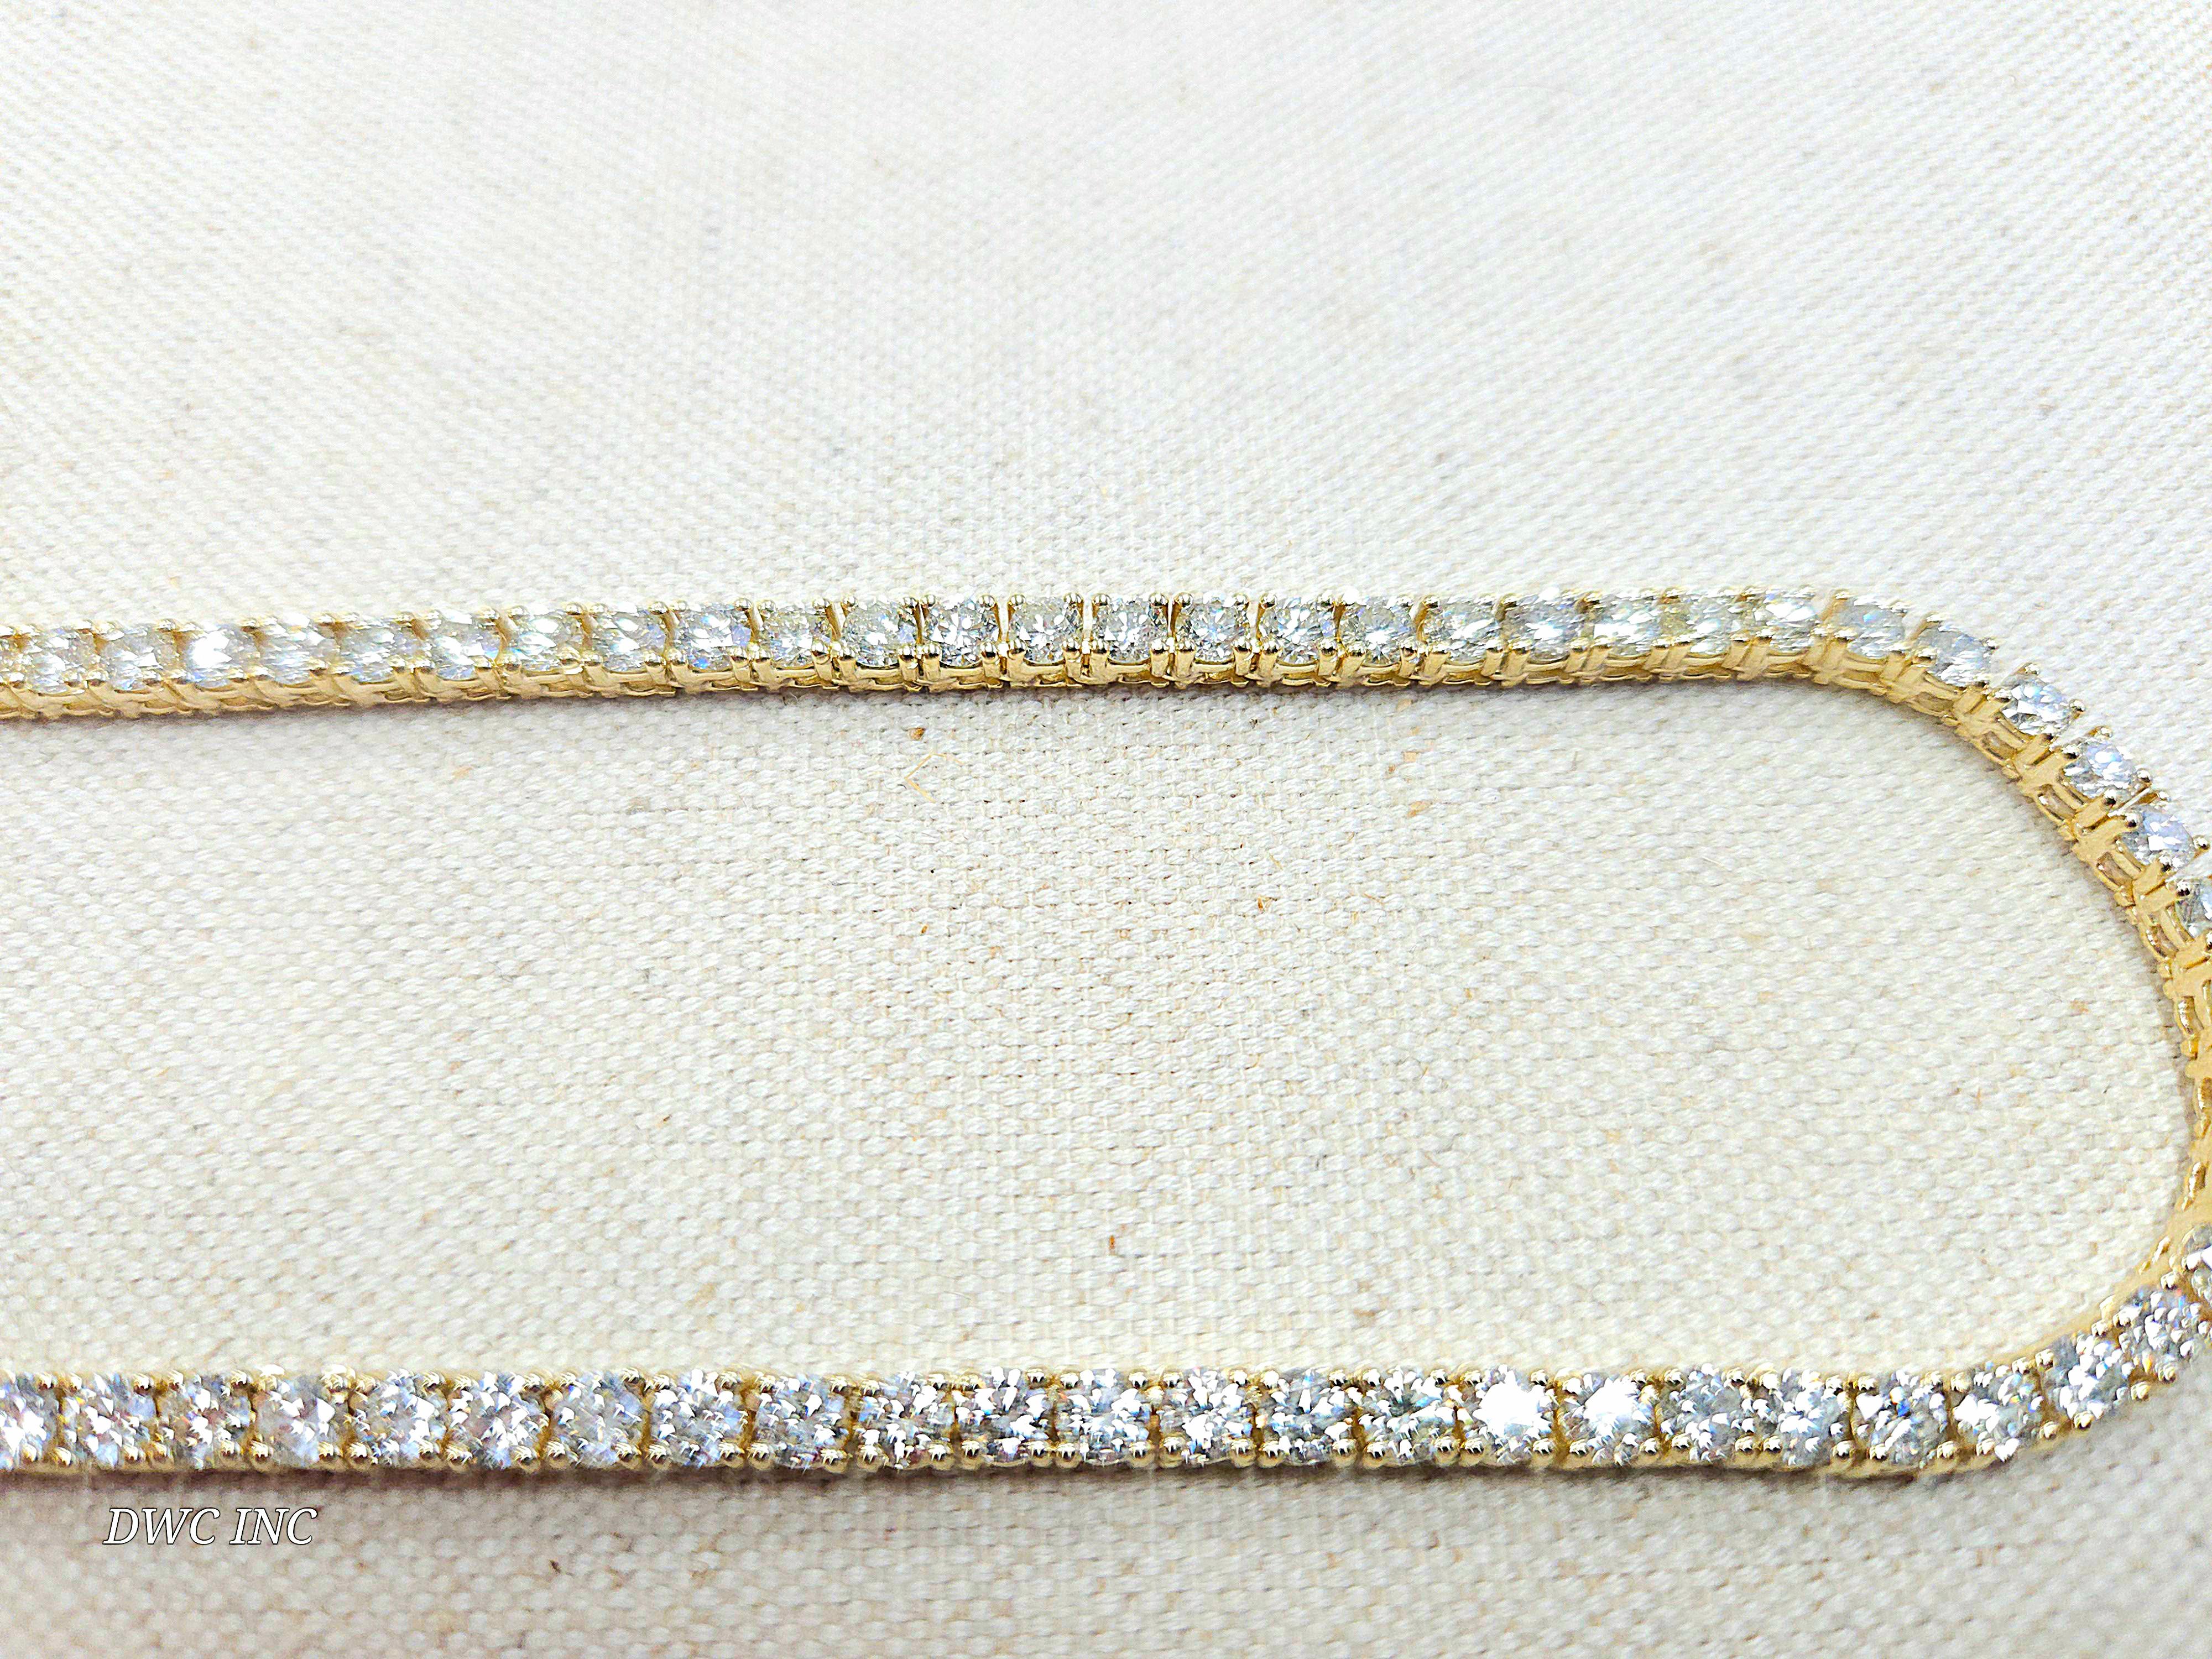 20 carat diamond tennis necklace